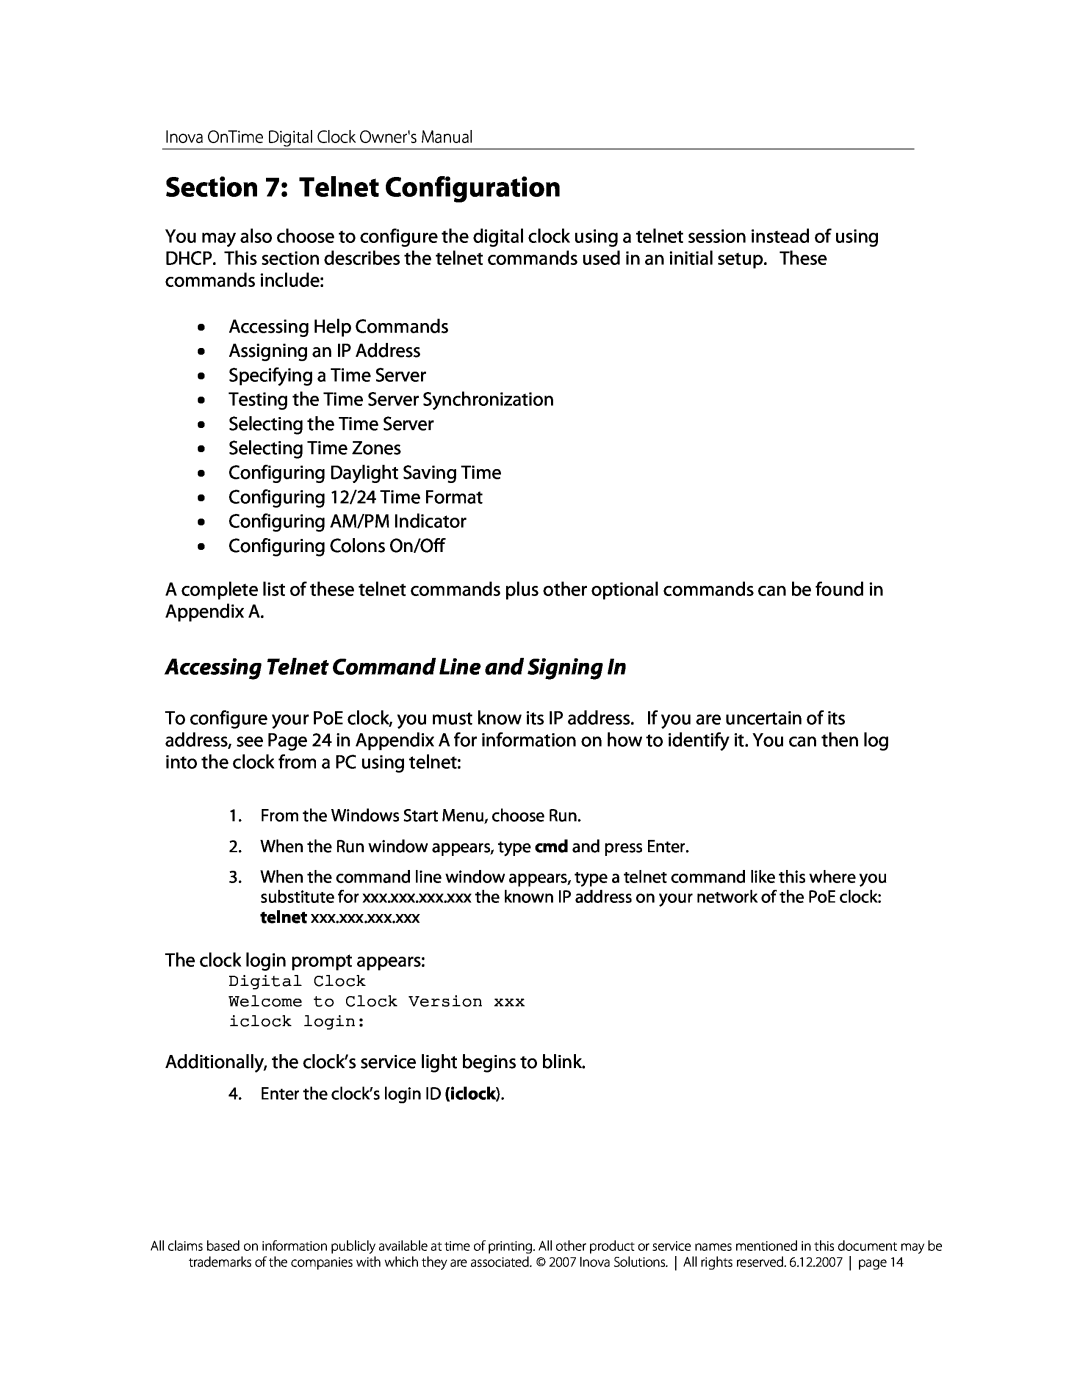 Inova OnTimeTM owner manual Telnet Configuration, Accessing Telnet Command Line and Signing In 